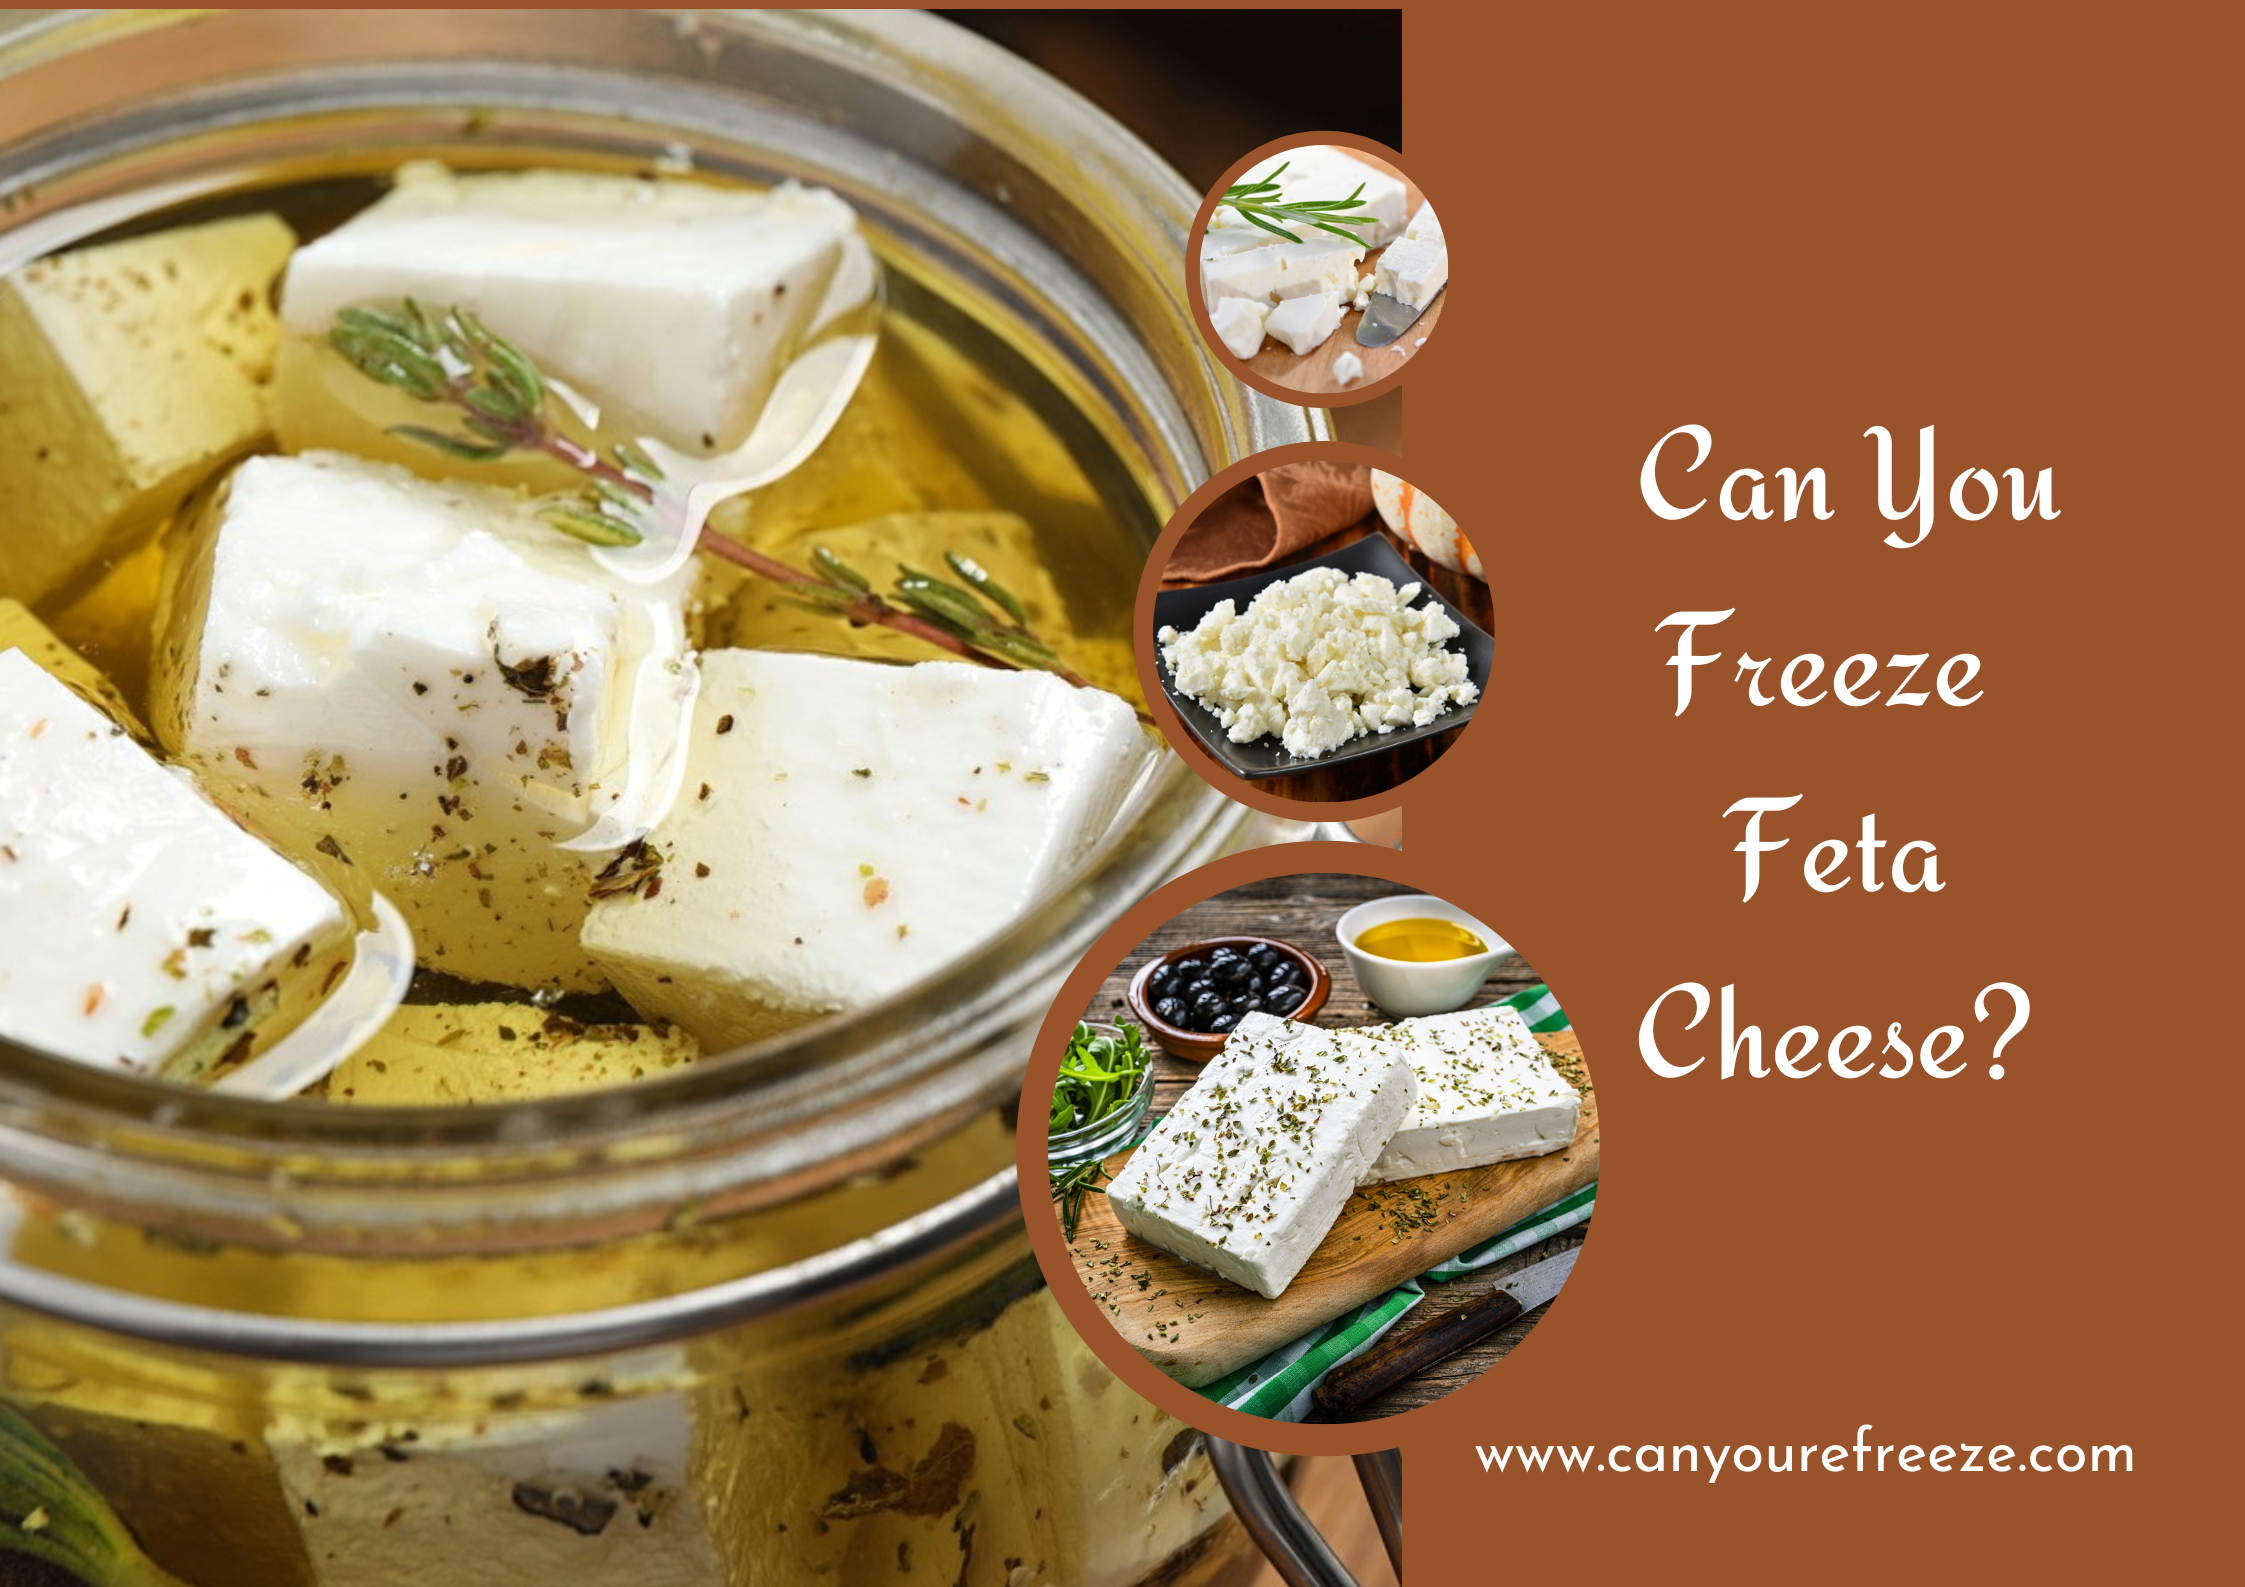 Can You Freeze Feta Cheese